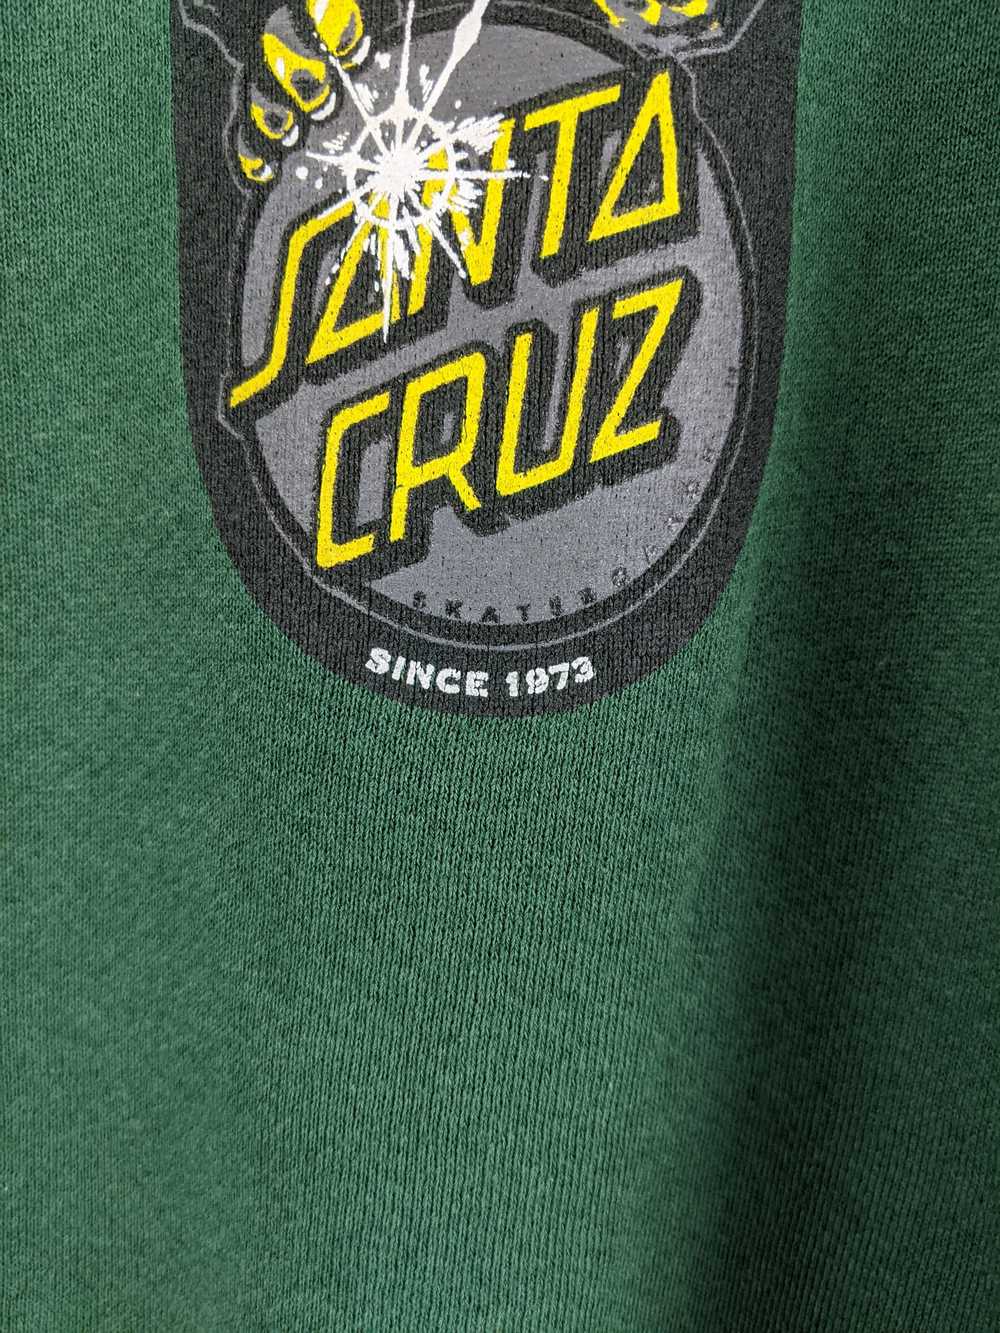 Vintage Santa Cruz Skateboard Sweatshirt - image 3